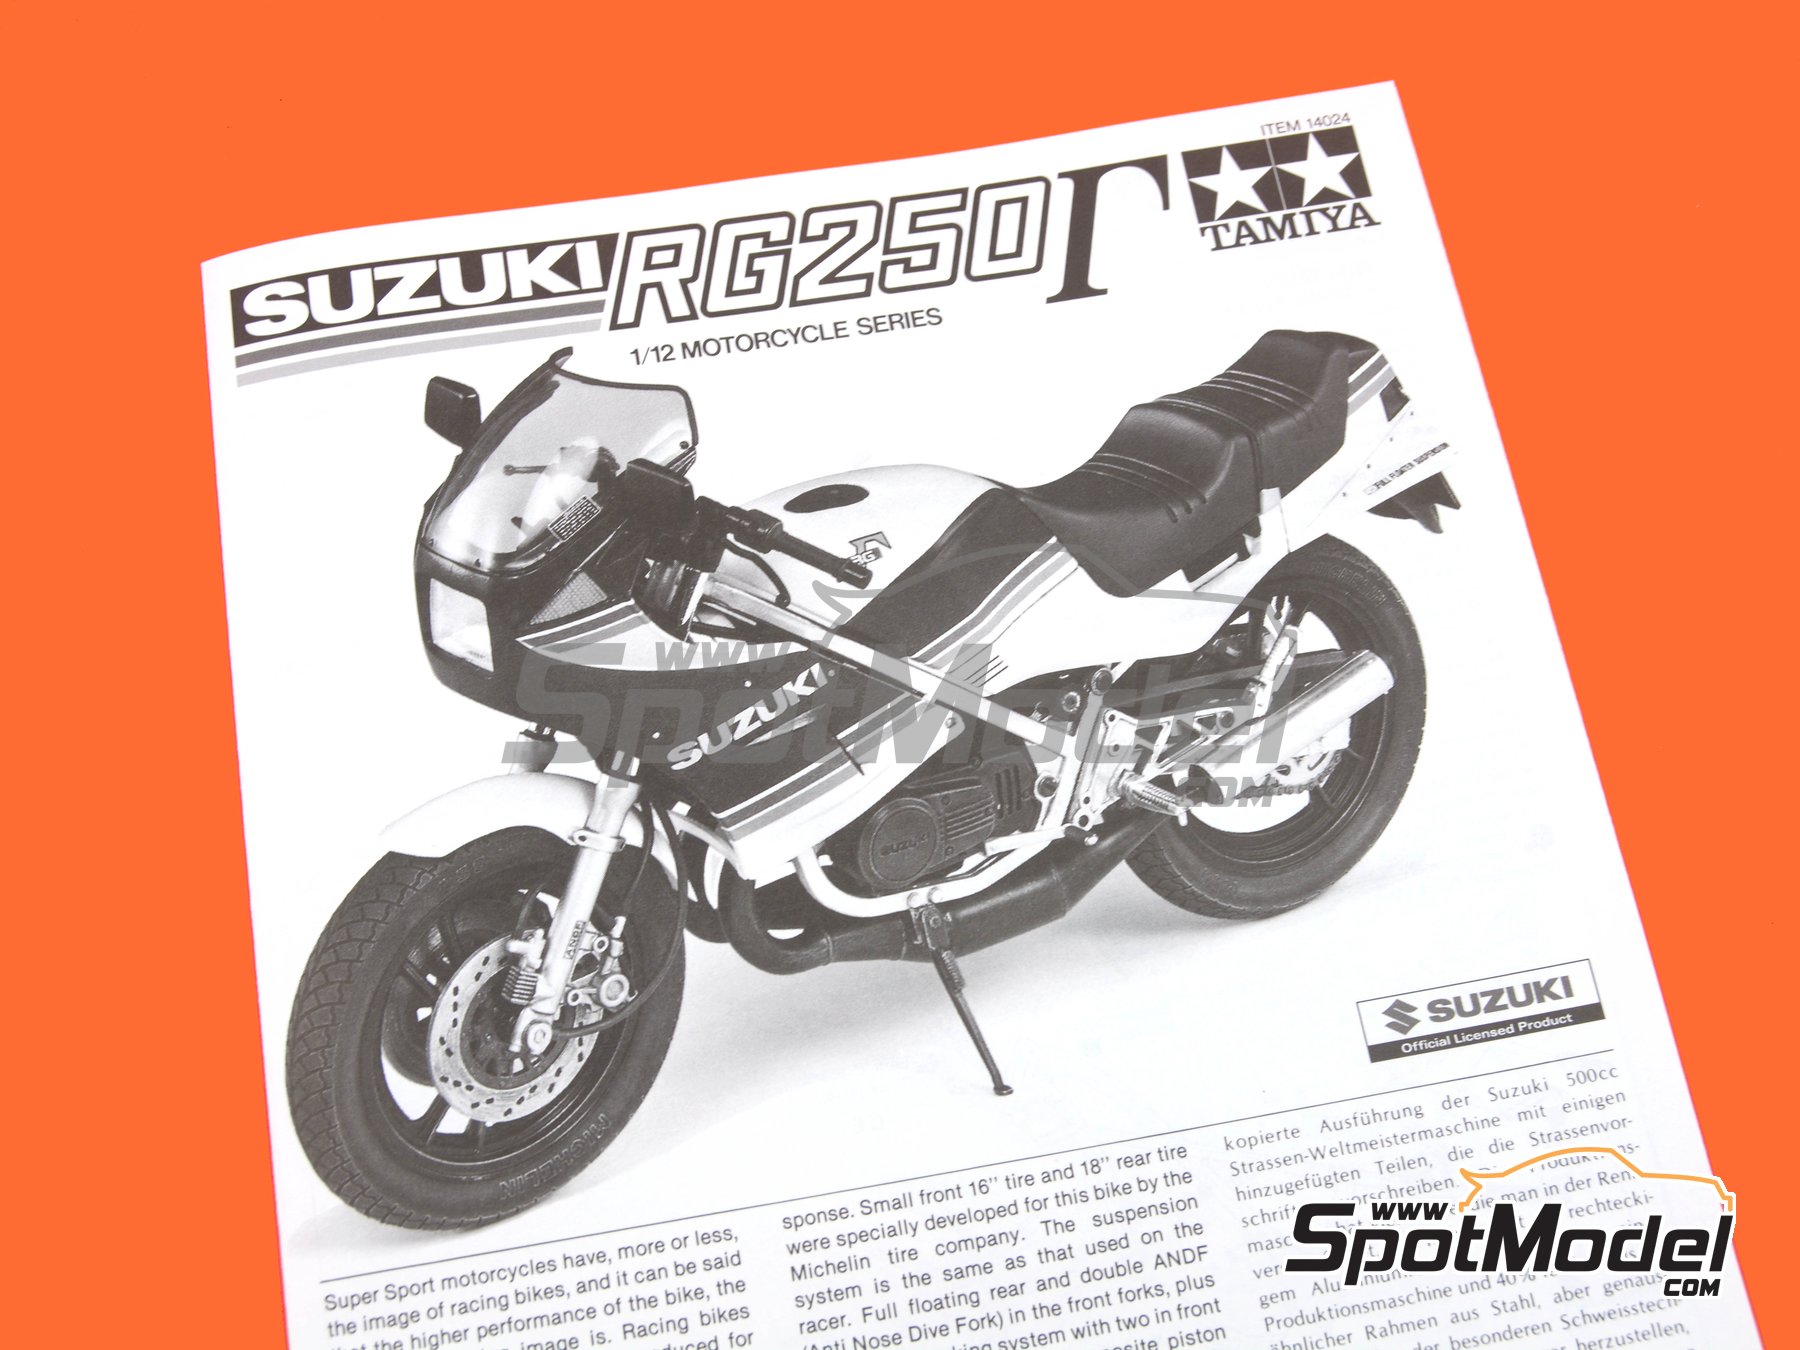 Tamiya Suzuki Rg250 1/12 Motorcycle Plastic Model Kit 14024 for sale online 